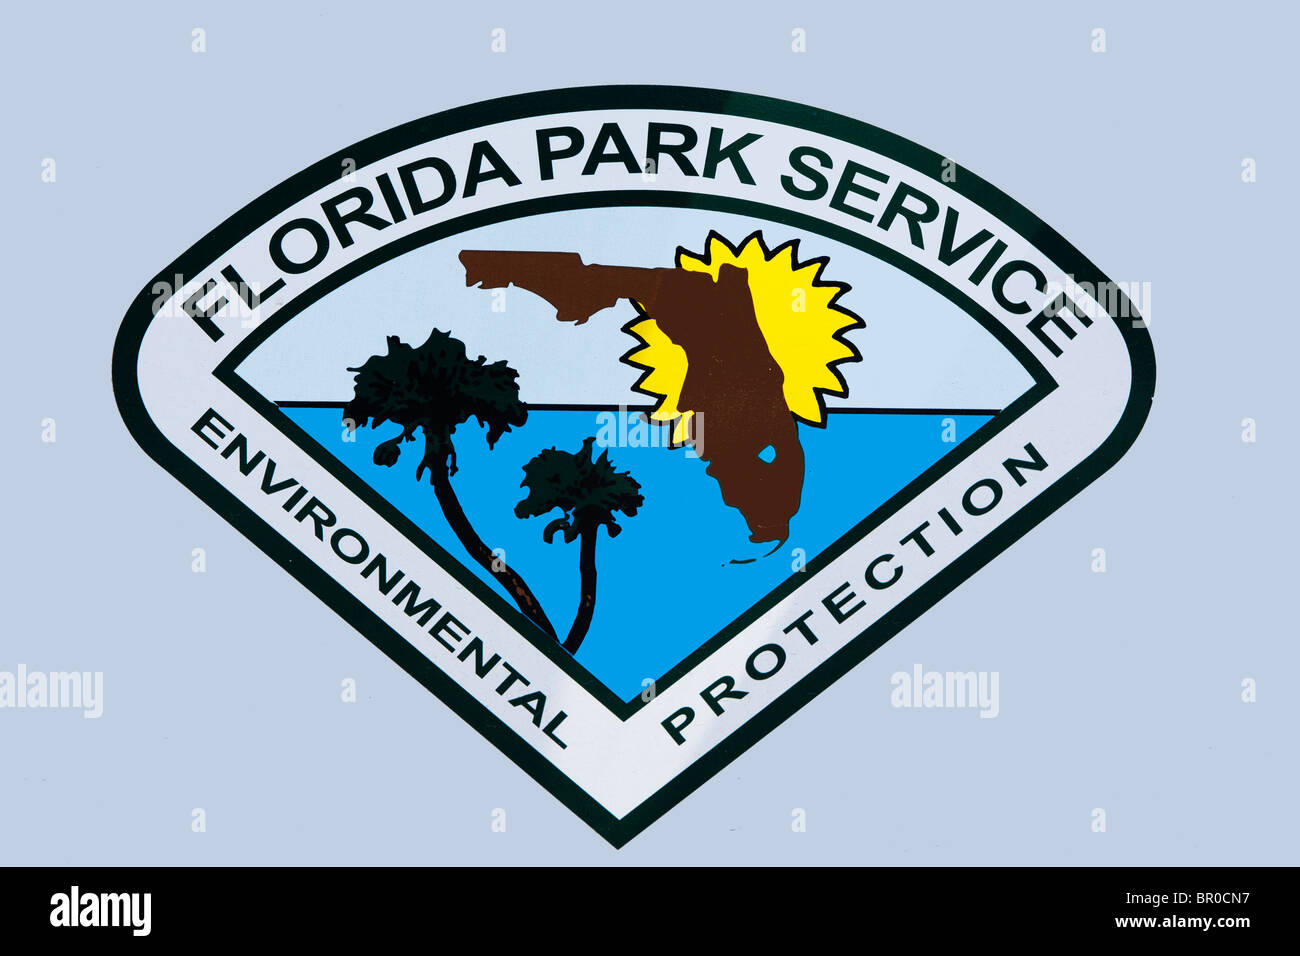 Florida Park Service logo Stockfoto